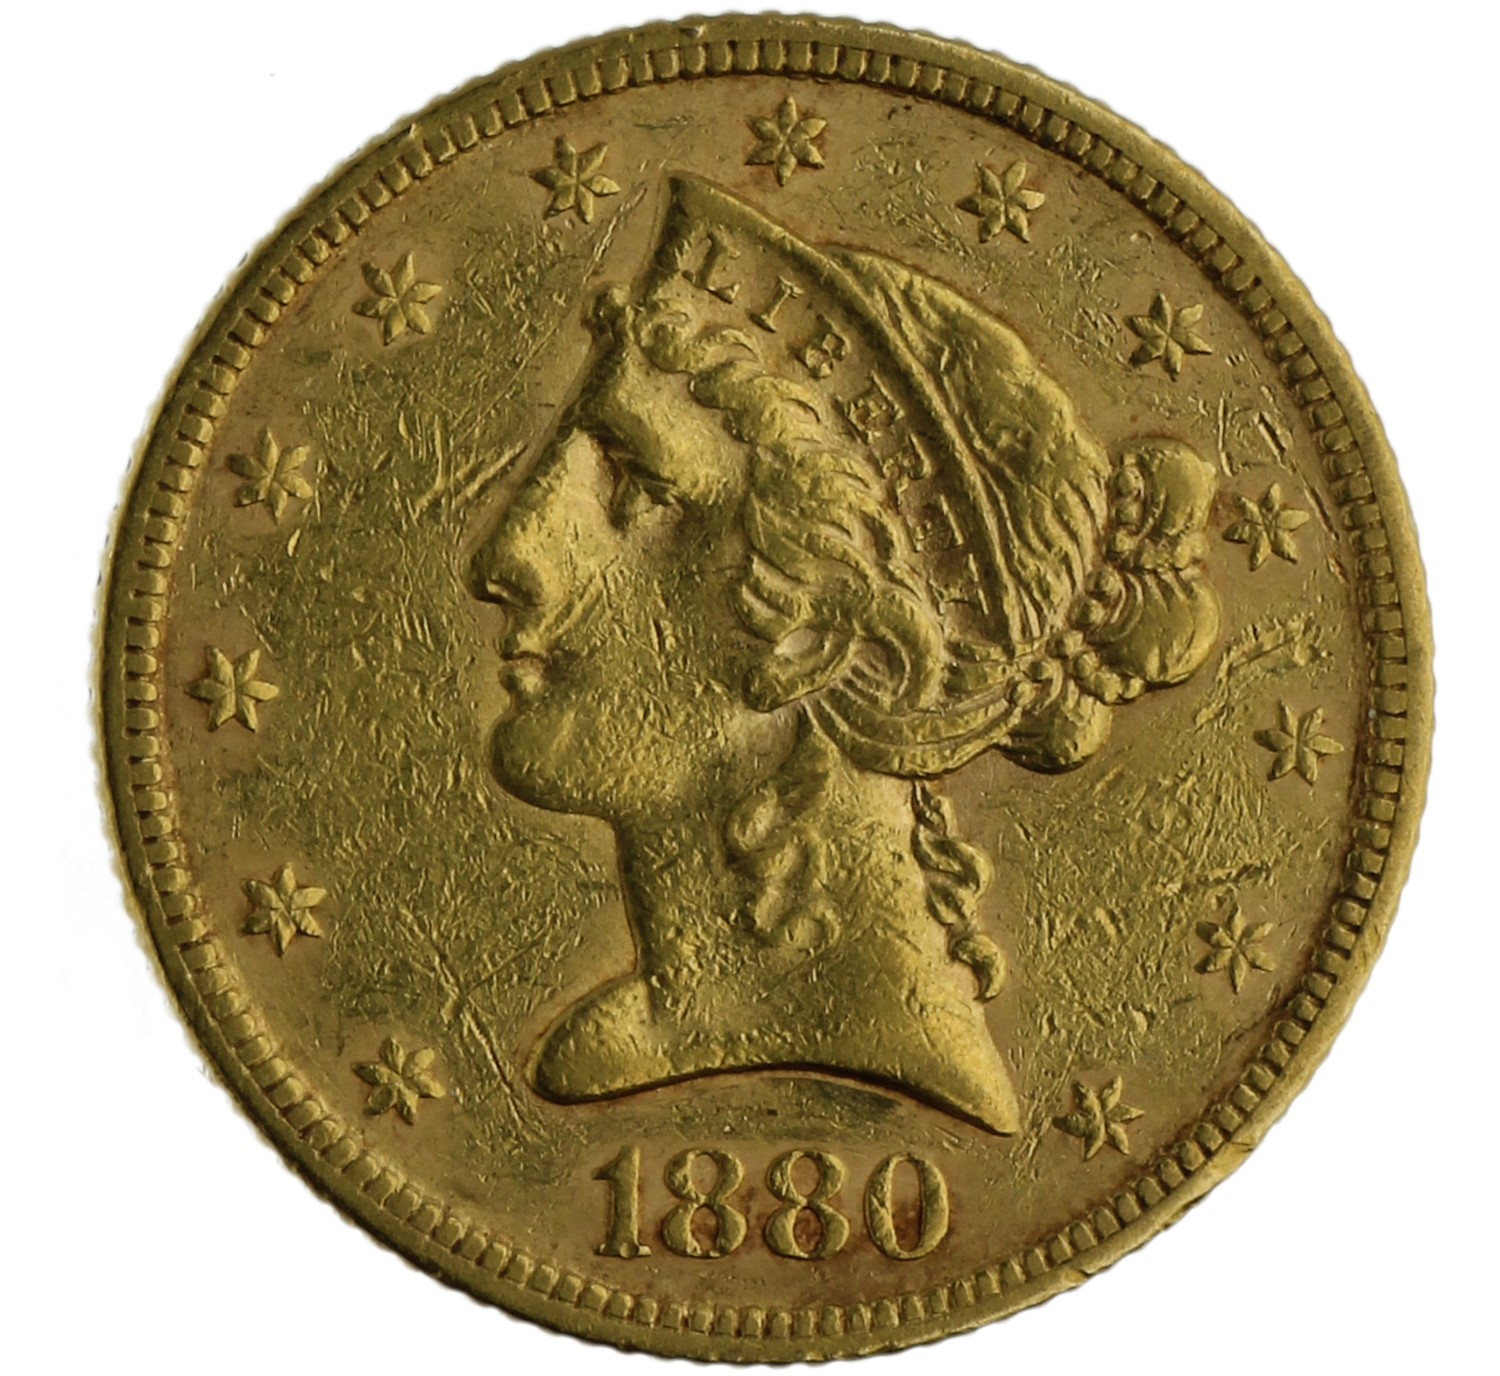 5 Dollars - USA - 1880